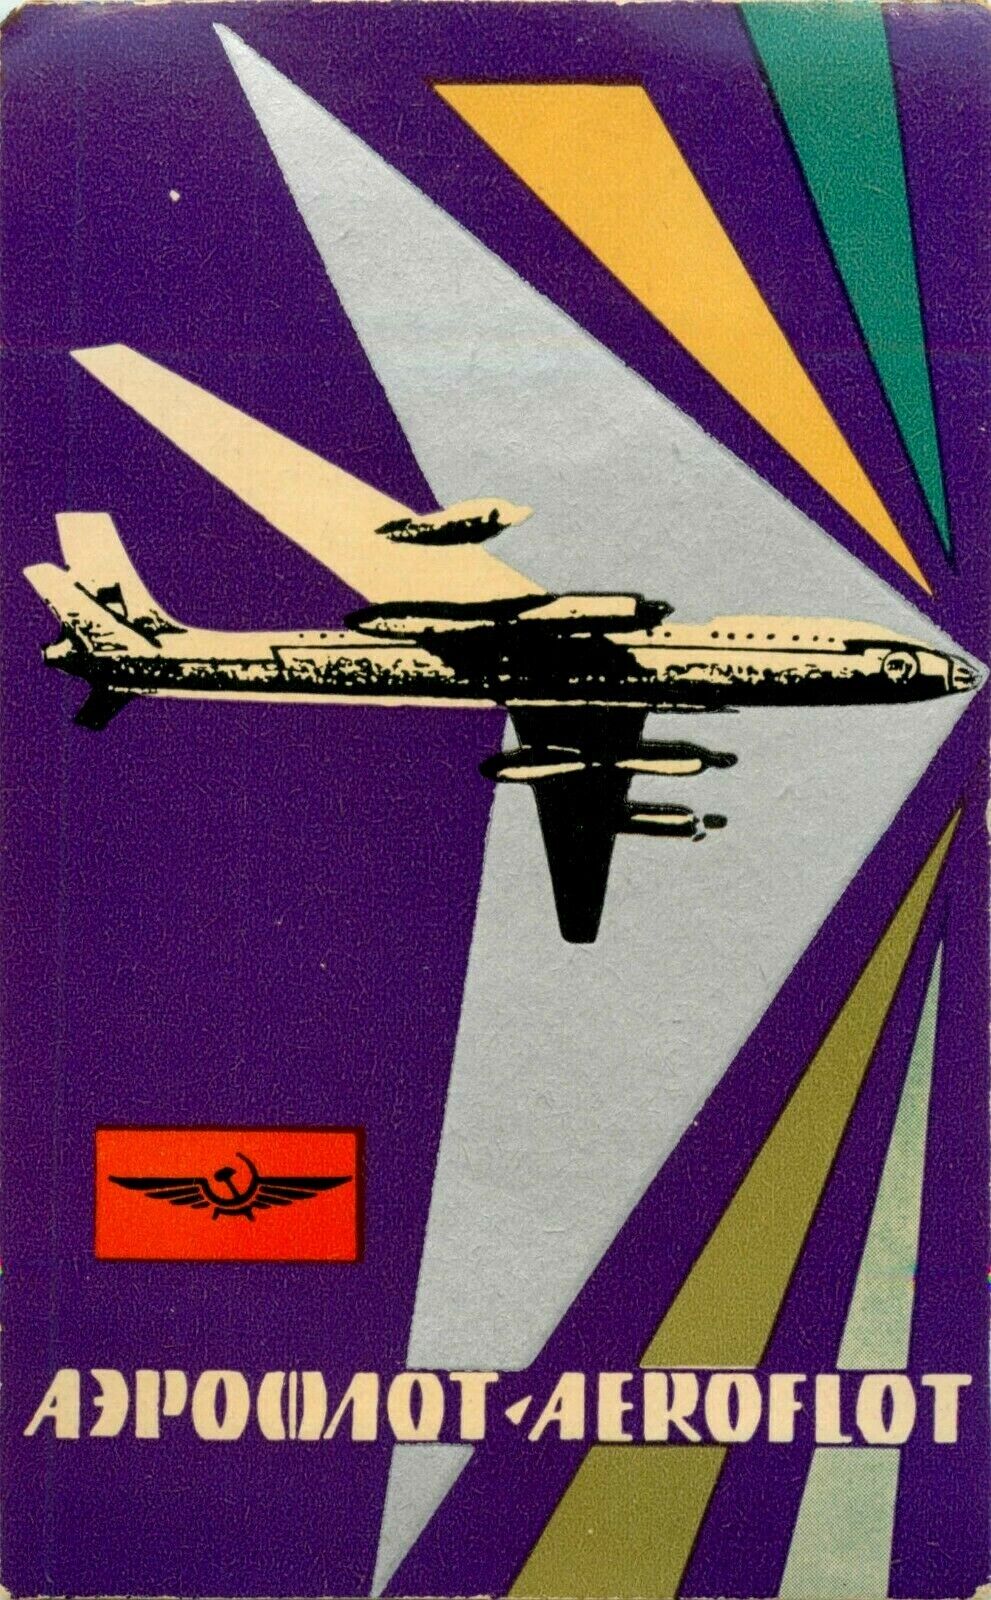 AEROFLOT  AIRLINES ~RUSSIA~ Vibrant ART DECO Airline Luggage label, c. 1955